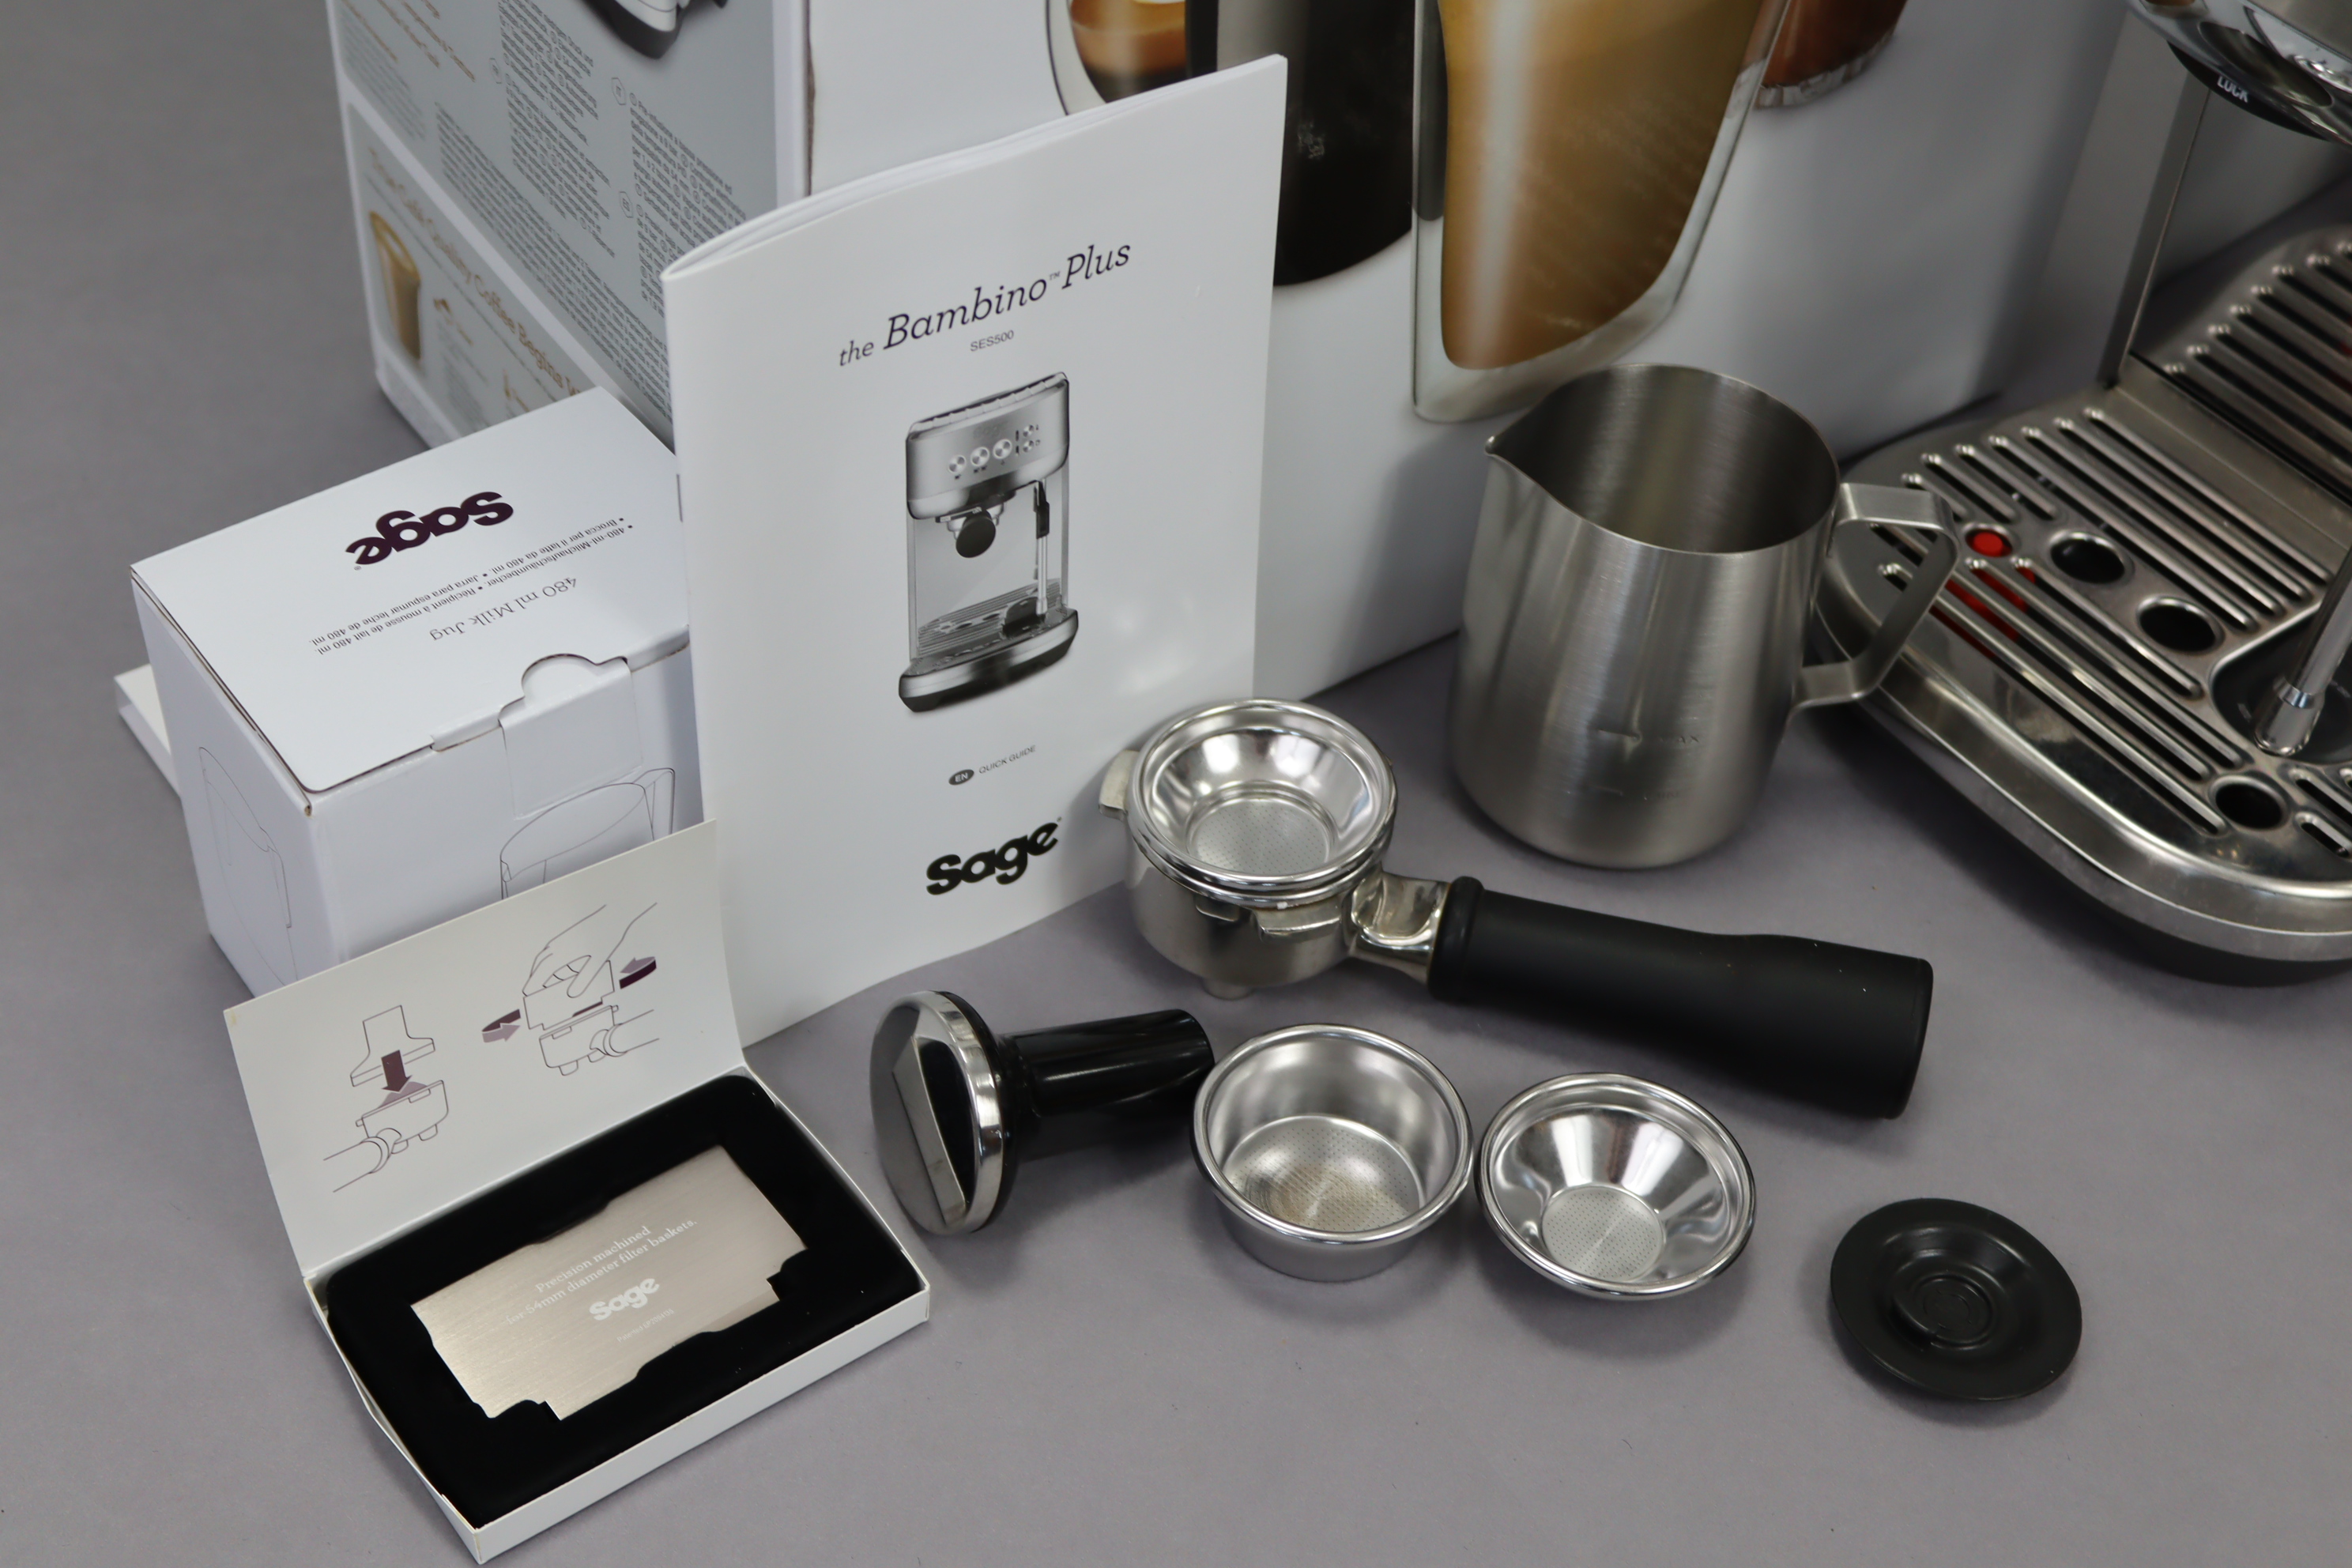 A Sage “Bambino Plus” coffee machine; & a box of twenty Nespresso coffee refills. - Image 4 of 10